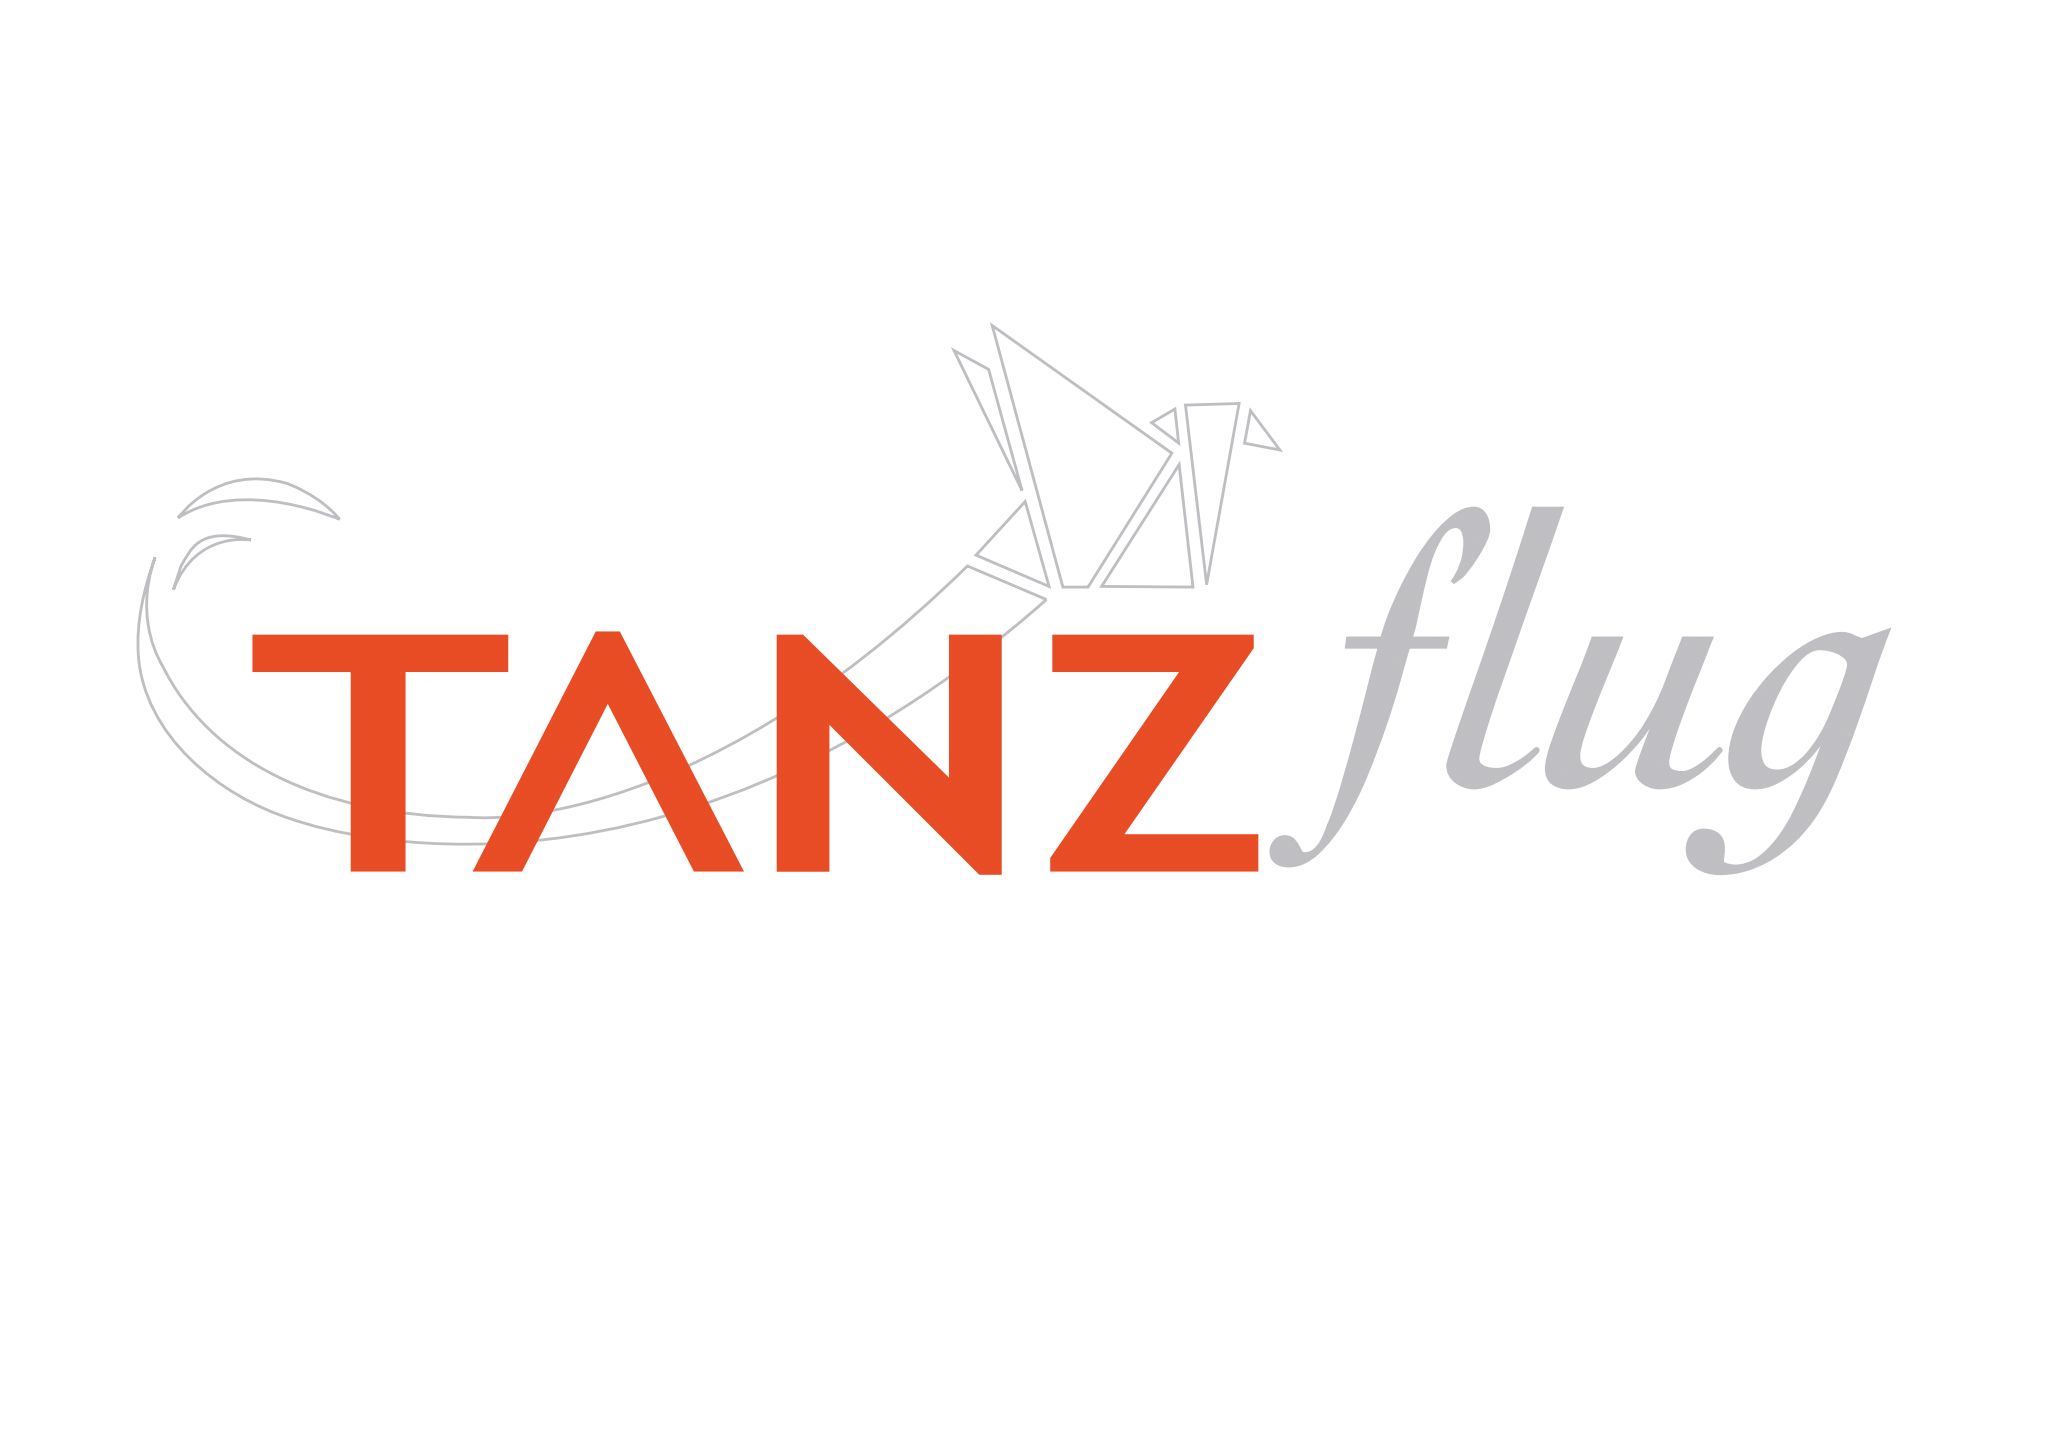 TANZflug logo_Namejpg